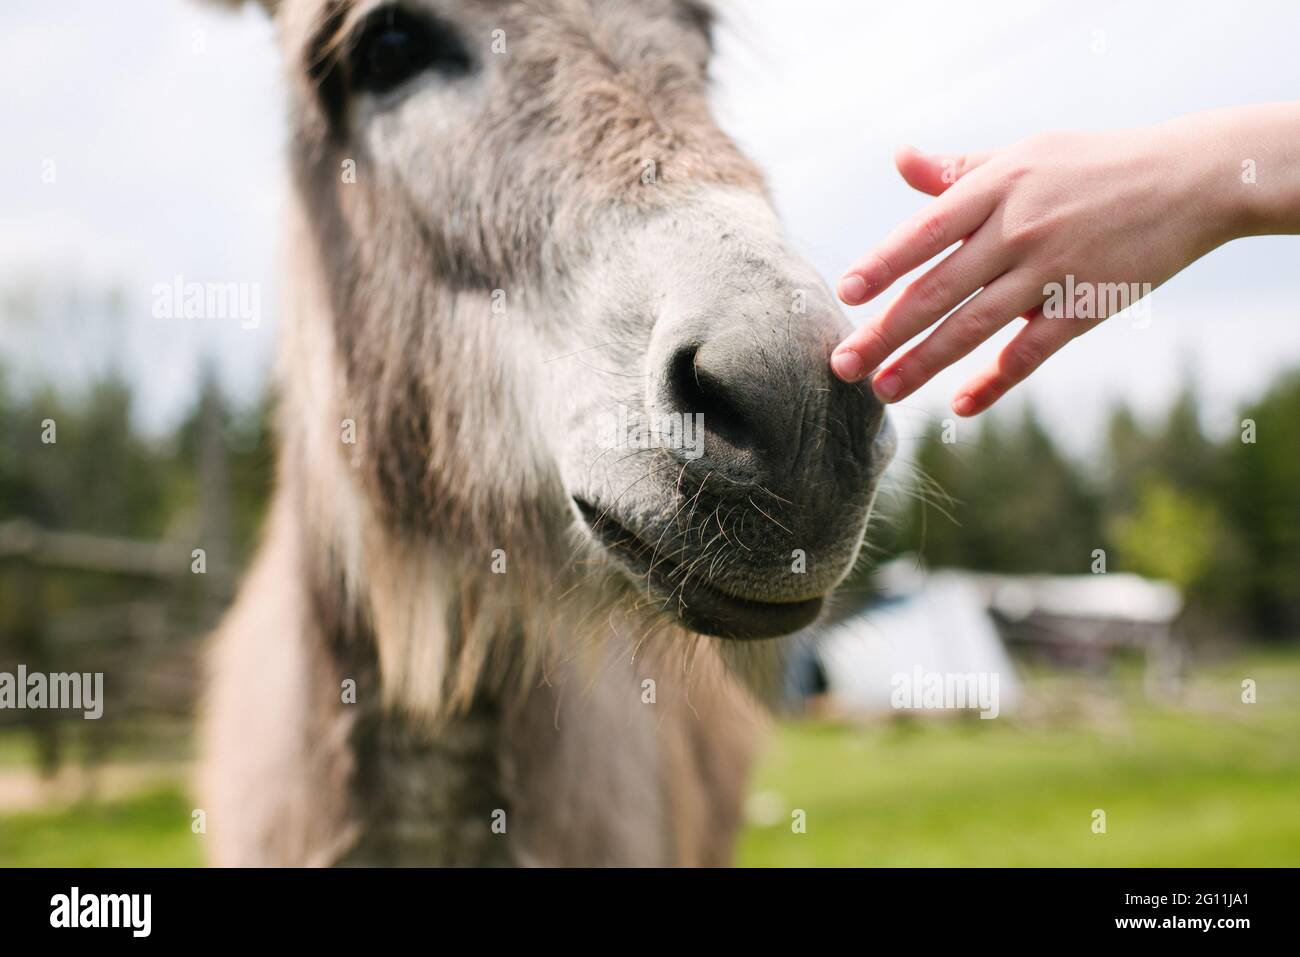 Canada, Ontario, Kingston, Boys hand touching donkeys nose Stock Photo